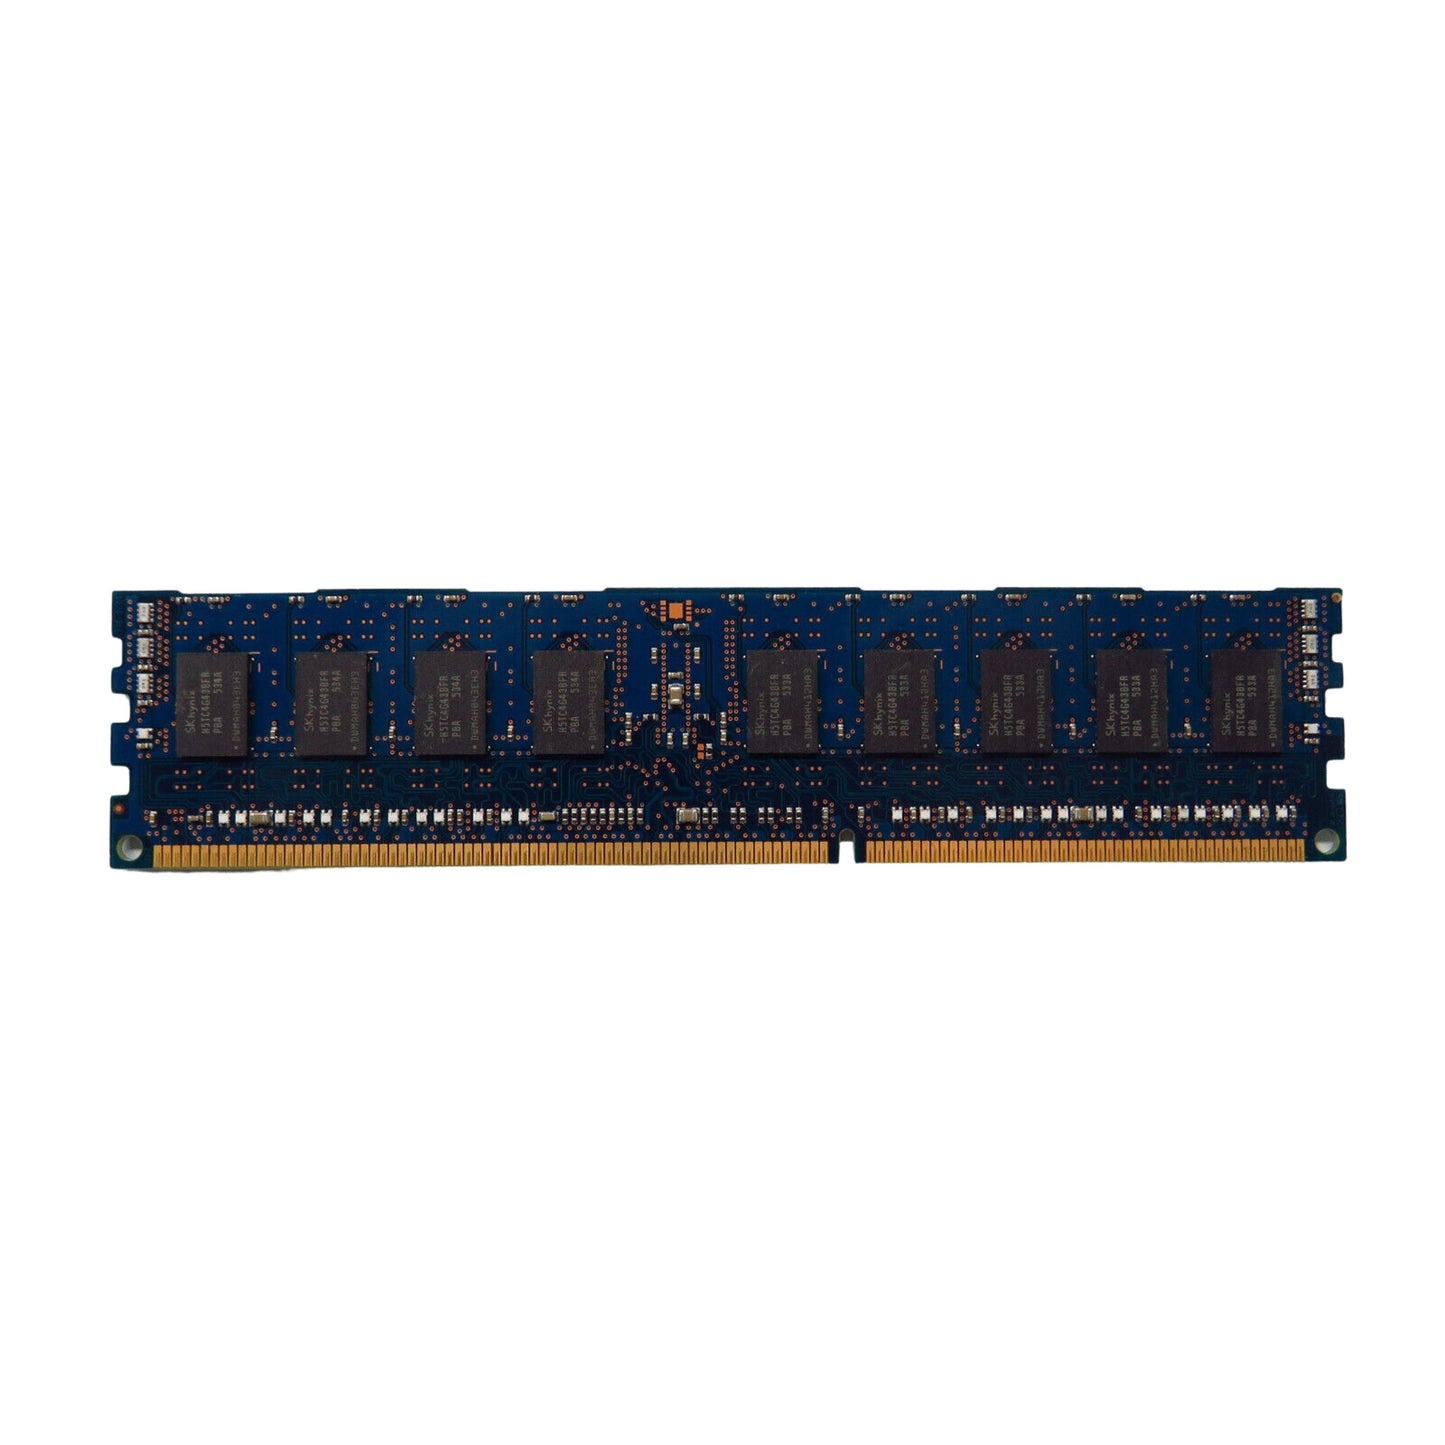 HP 731656-081 735302-001 8GB 1Rx4 PC3L-12800R 1600MHz DDR3 ECC Server Memory (Refurbished)